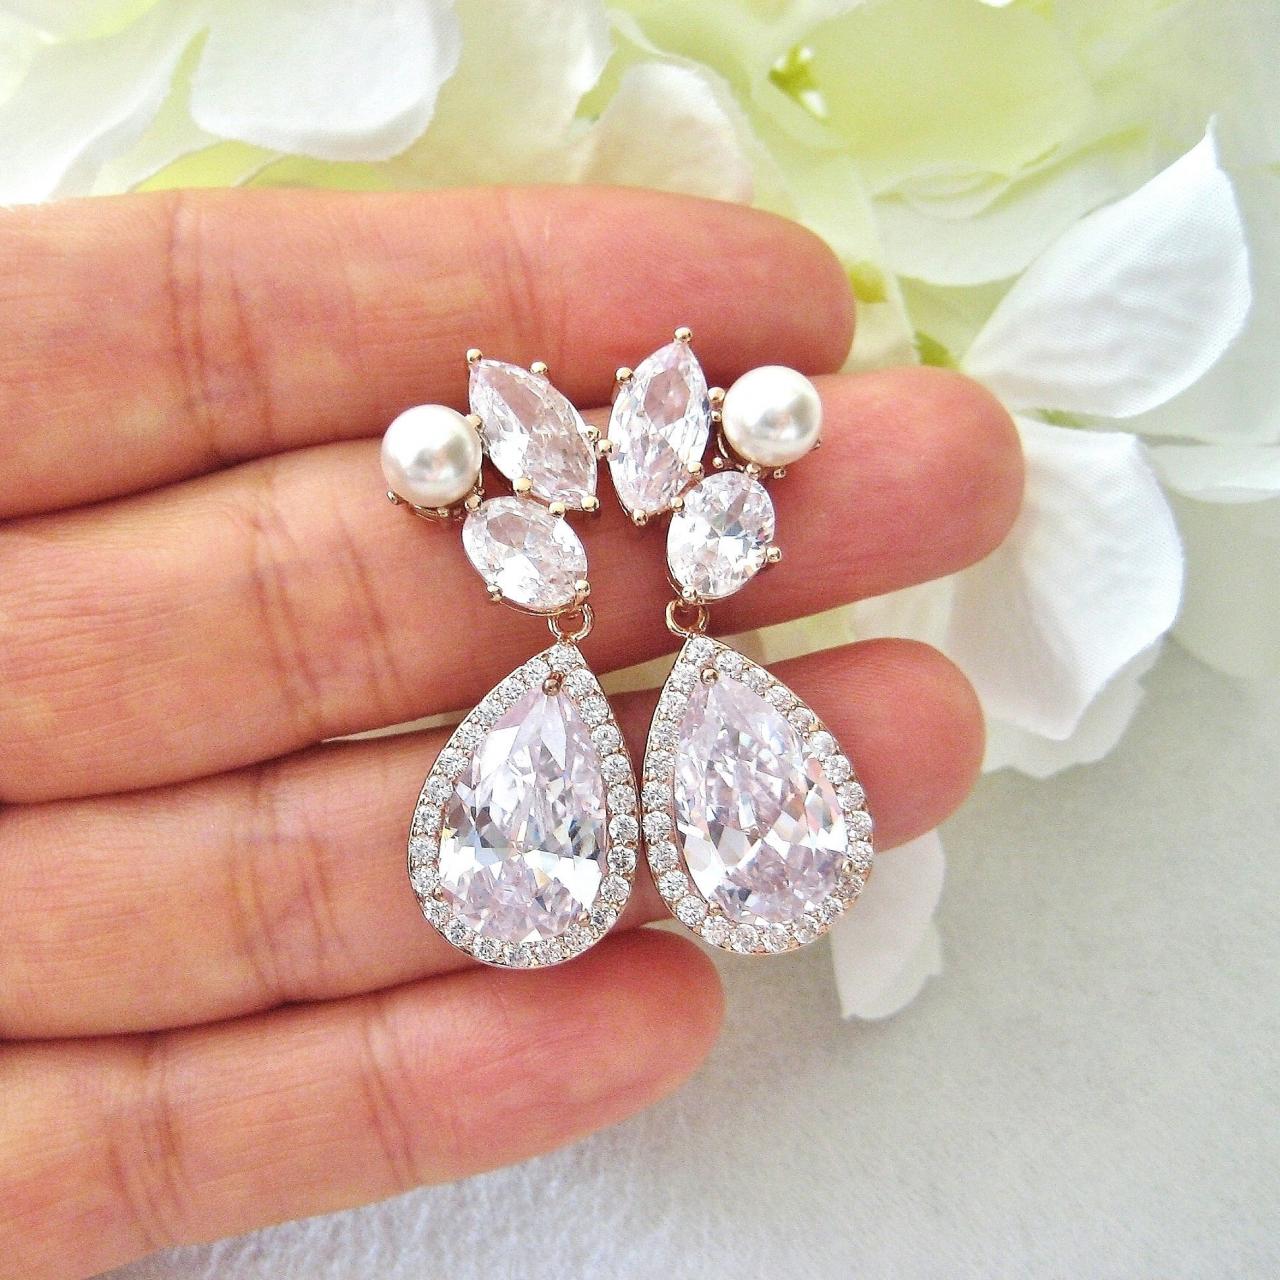 Bridal Crystal Earrings Rose Gold Teardrop Earrings Wedding Pearl Earrings Swarovski Pearl Earrings Bridesmaids Gift (e312)